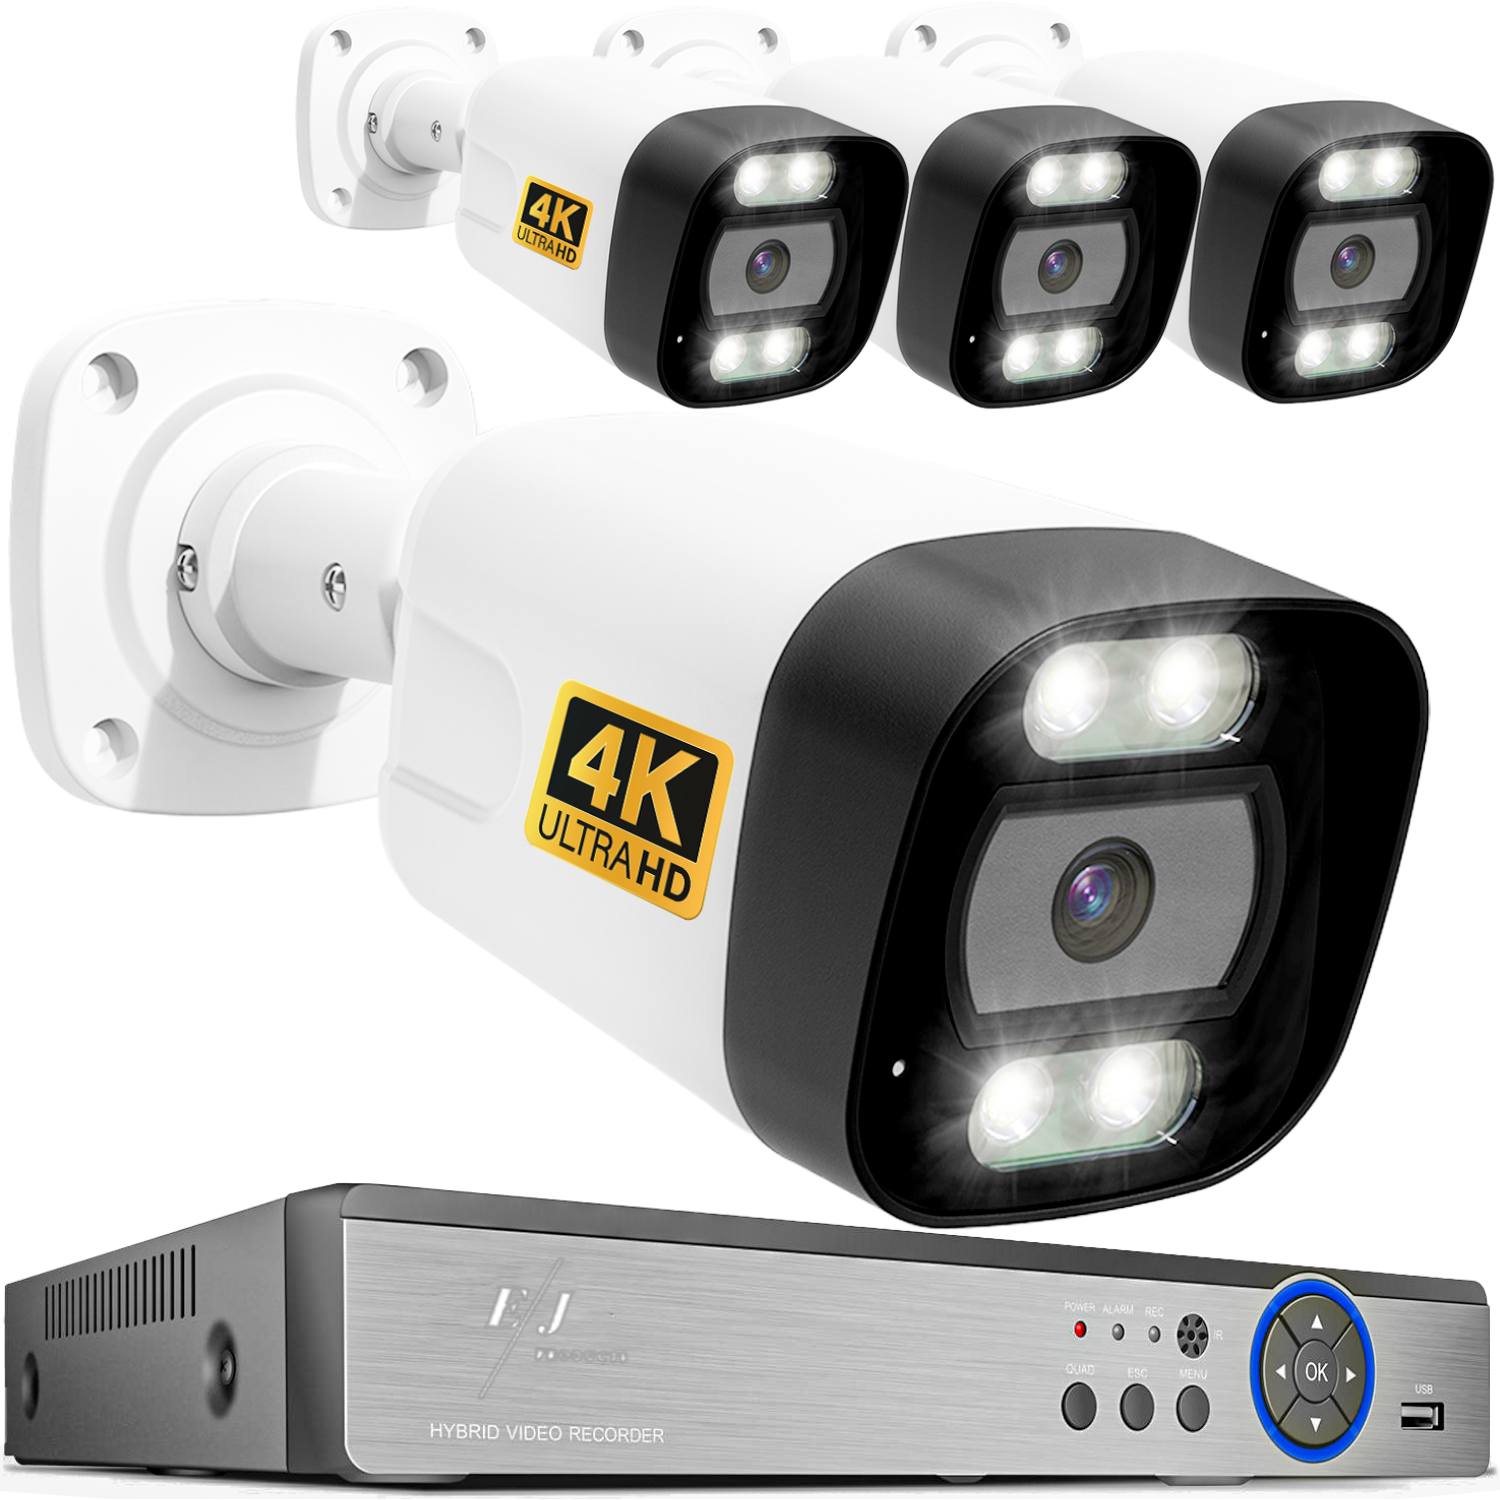 Sistem supraveghere video cu 4 camere Ultra HD 4K, DVR 4 canale, transmisie live - PK-8HB718